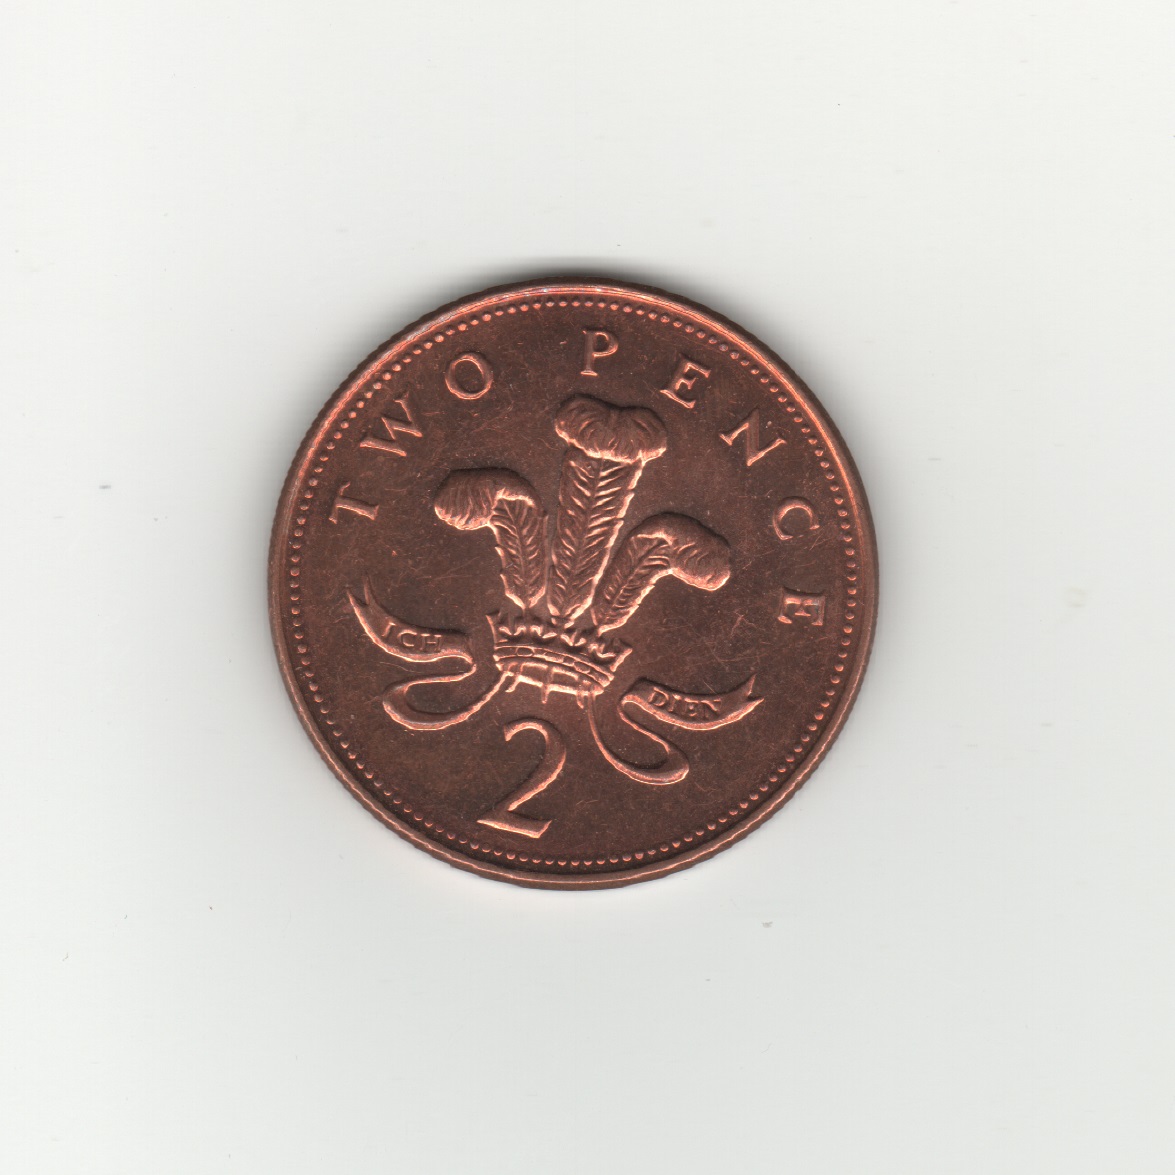  Großbritannien 2 Pence 1999   